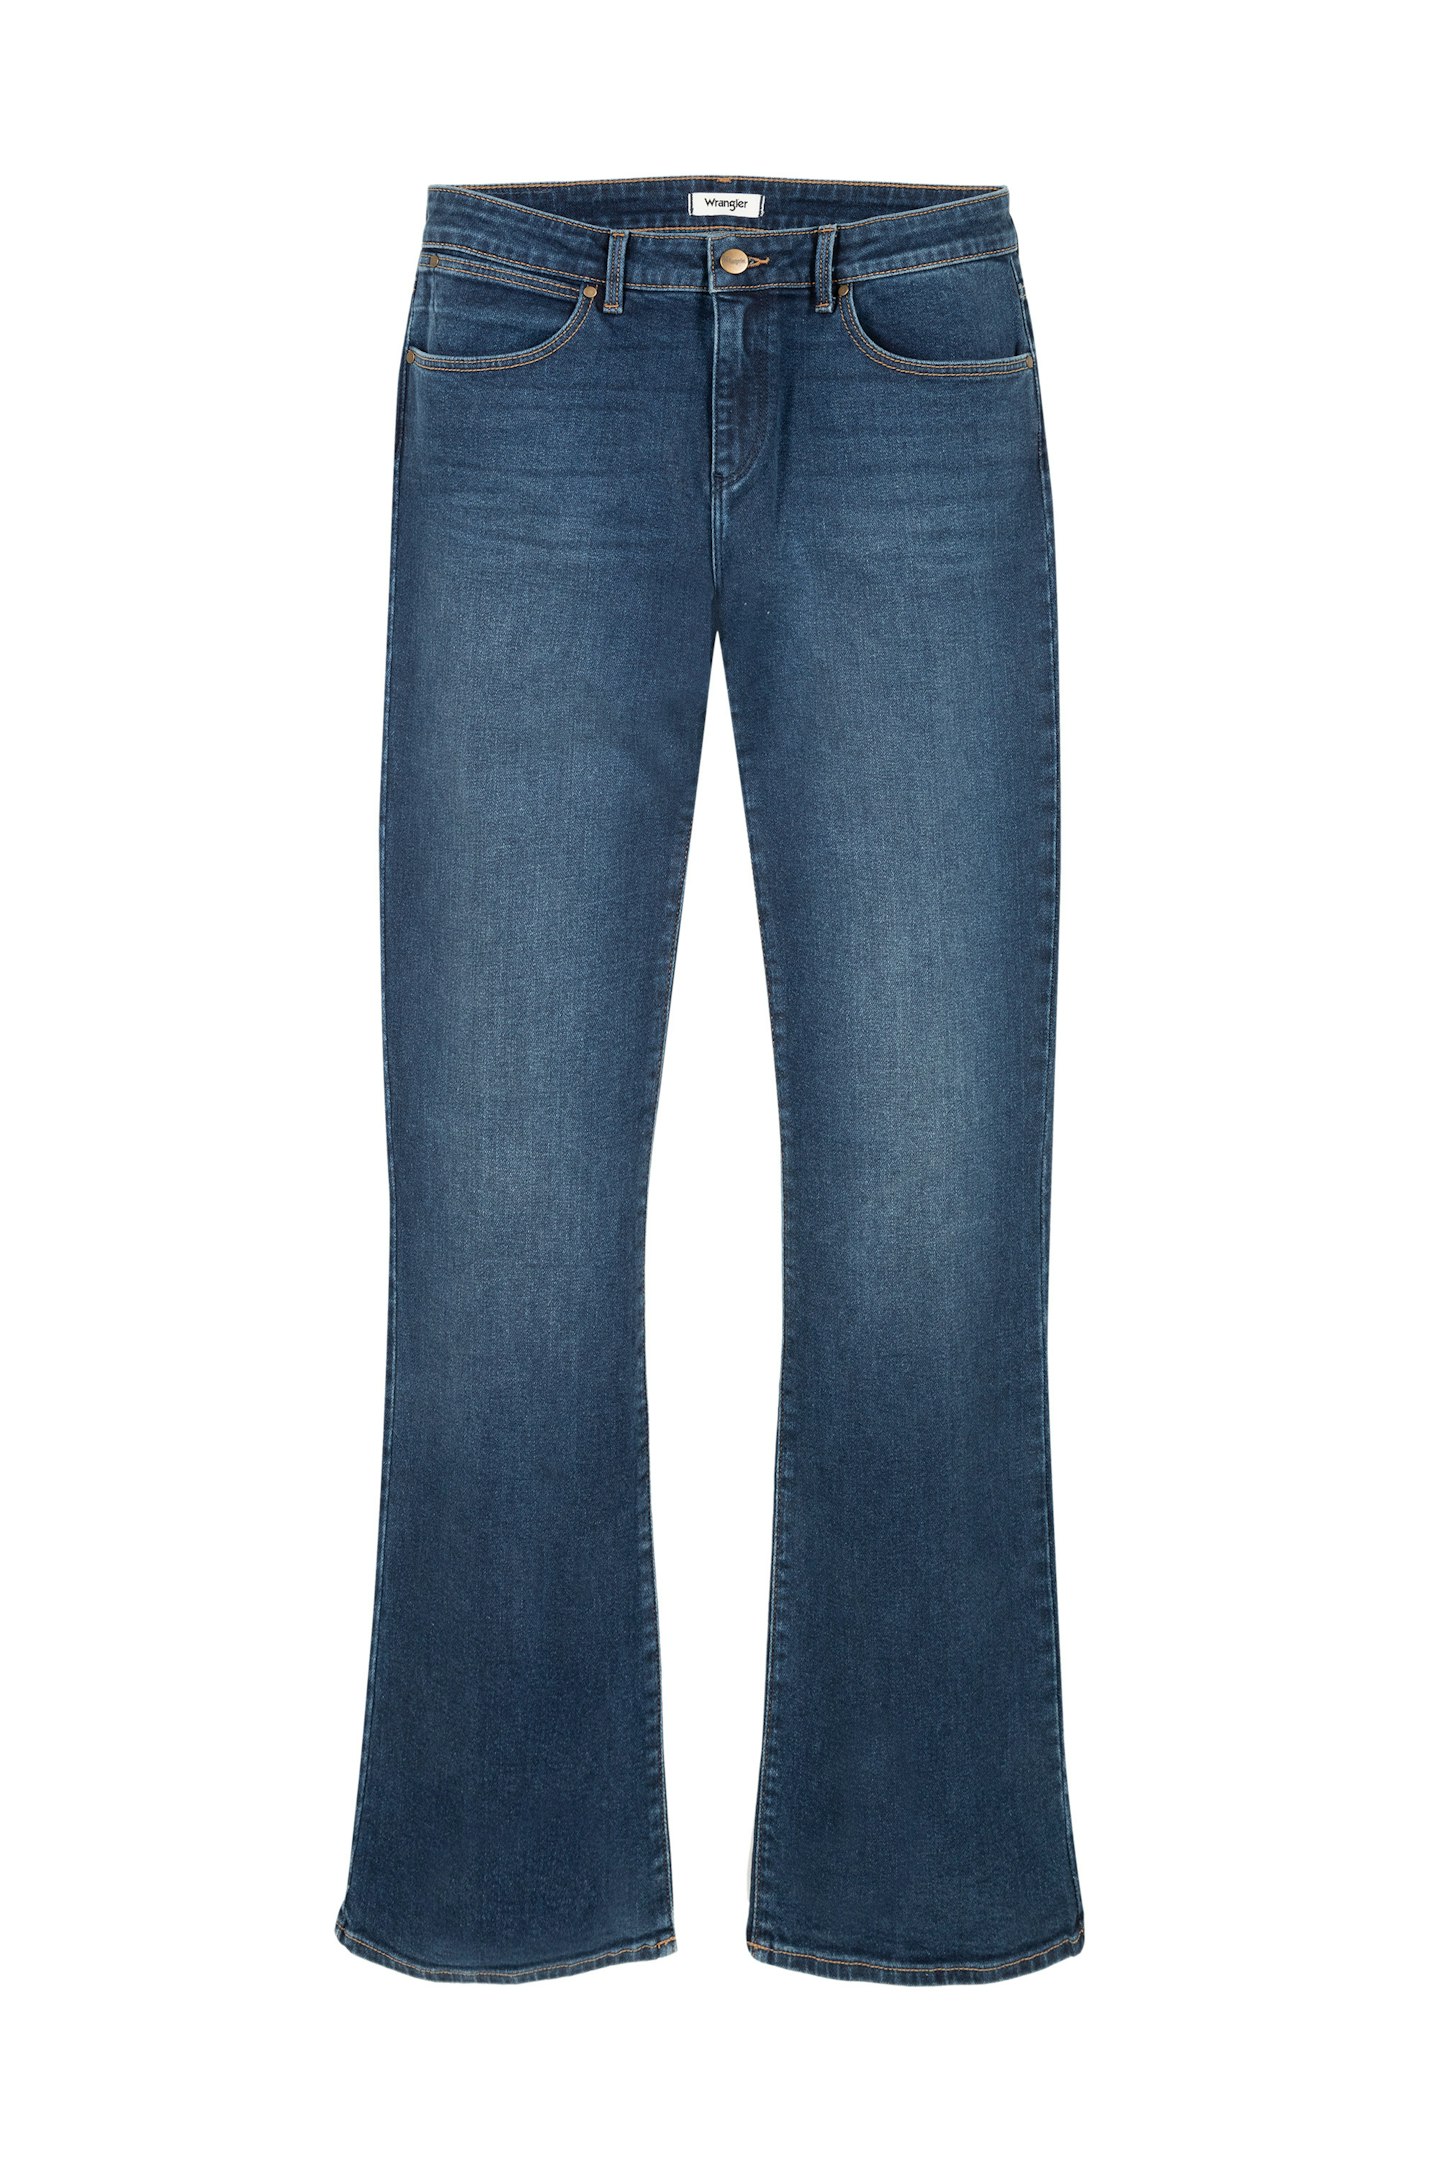 Wrangler, Bootcut jeans, £80